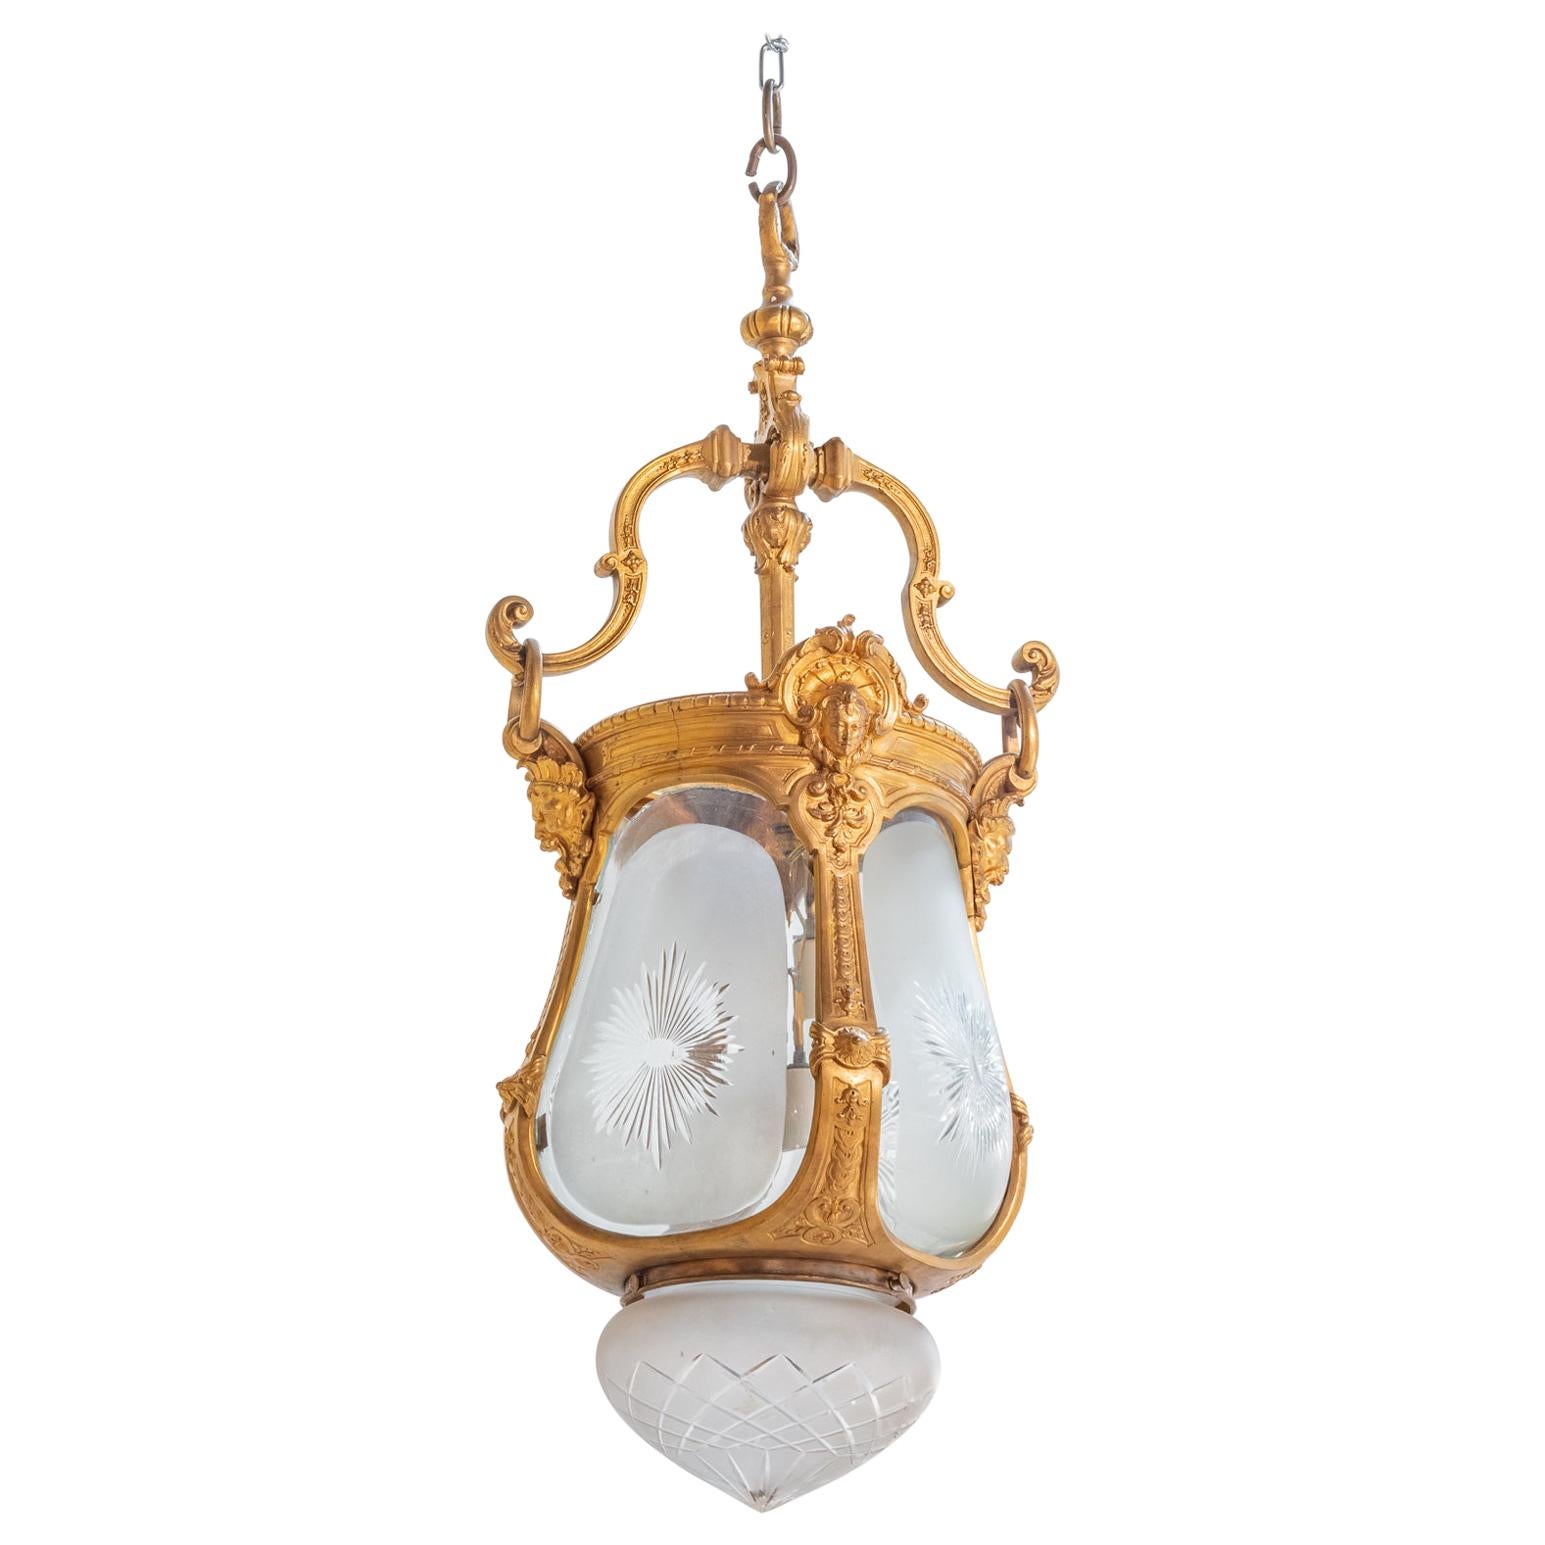 Fine and Beautiful 19th Century French Cut Crystal Gilt Bronze Lantern